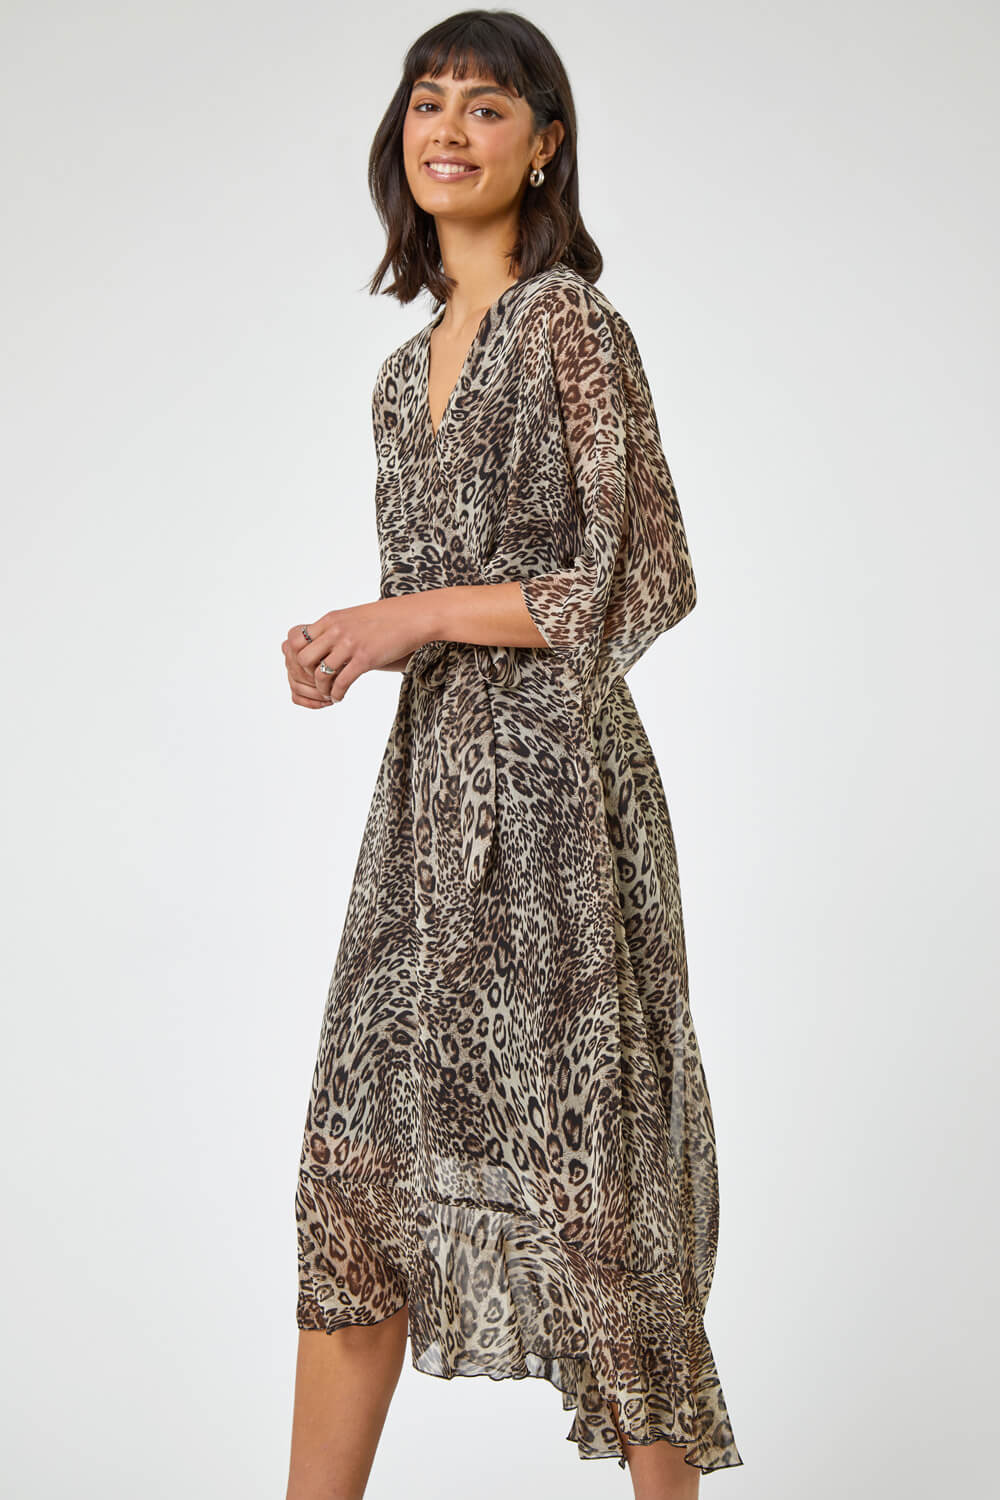 Brown Animal Print Chiffon Wrap Dress, Image 4 of 5